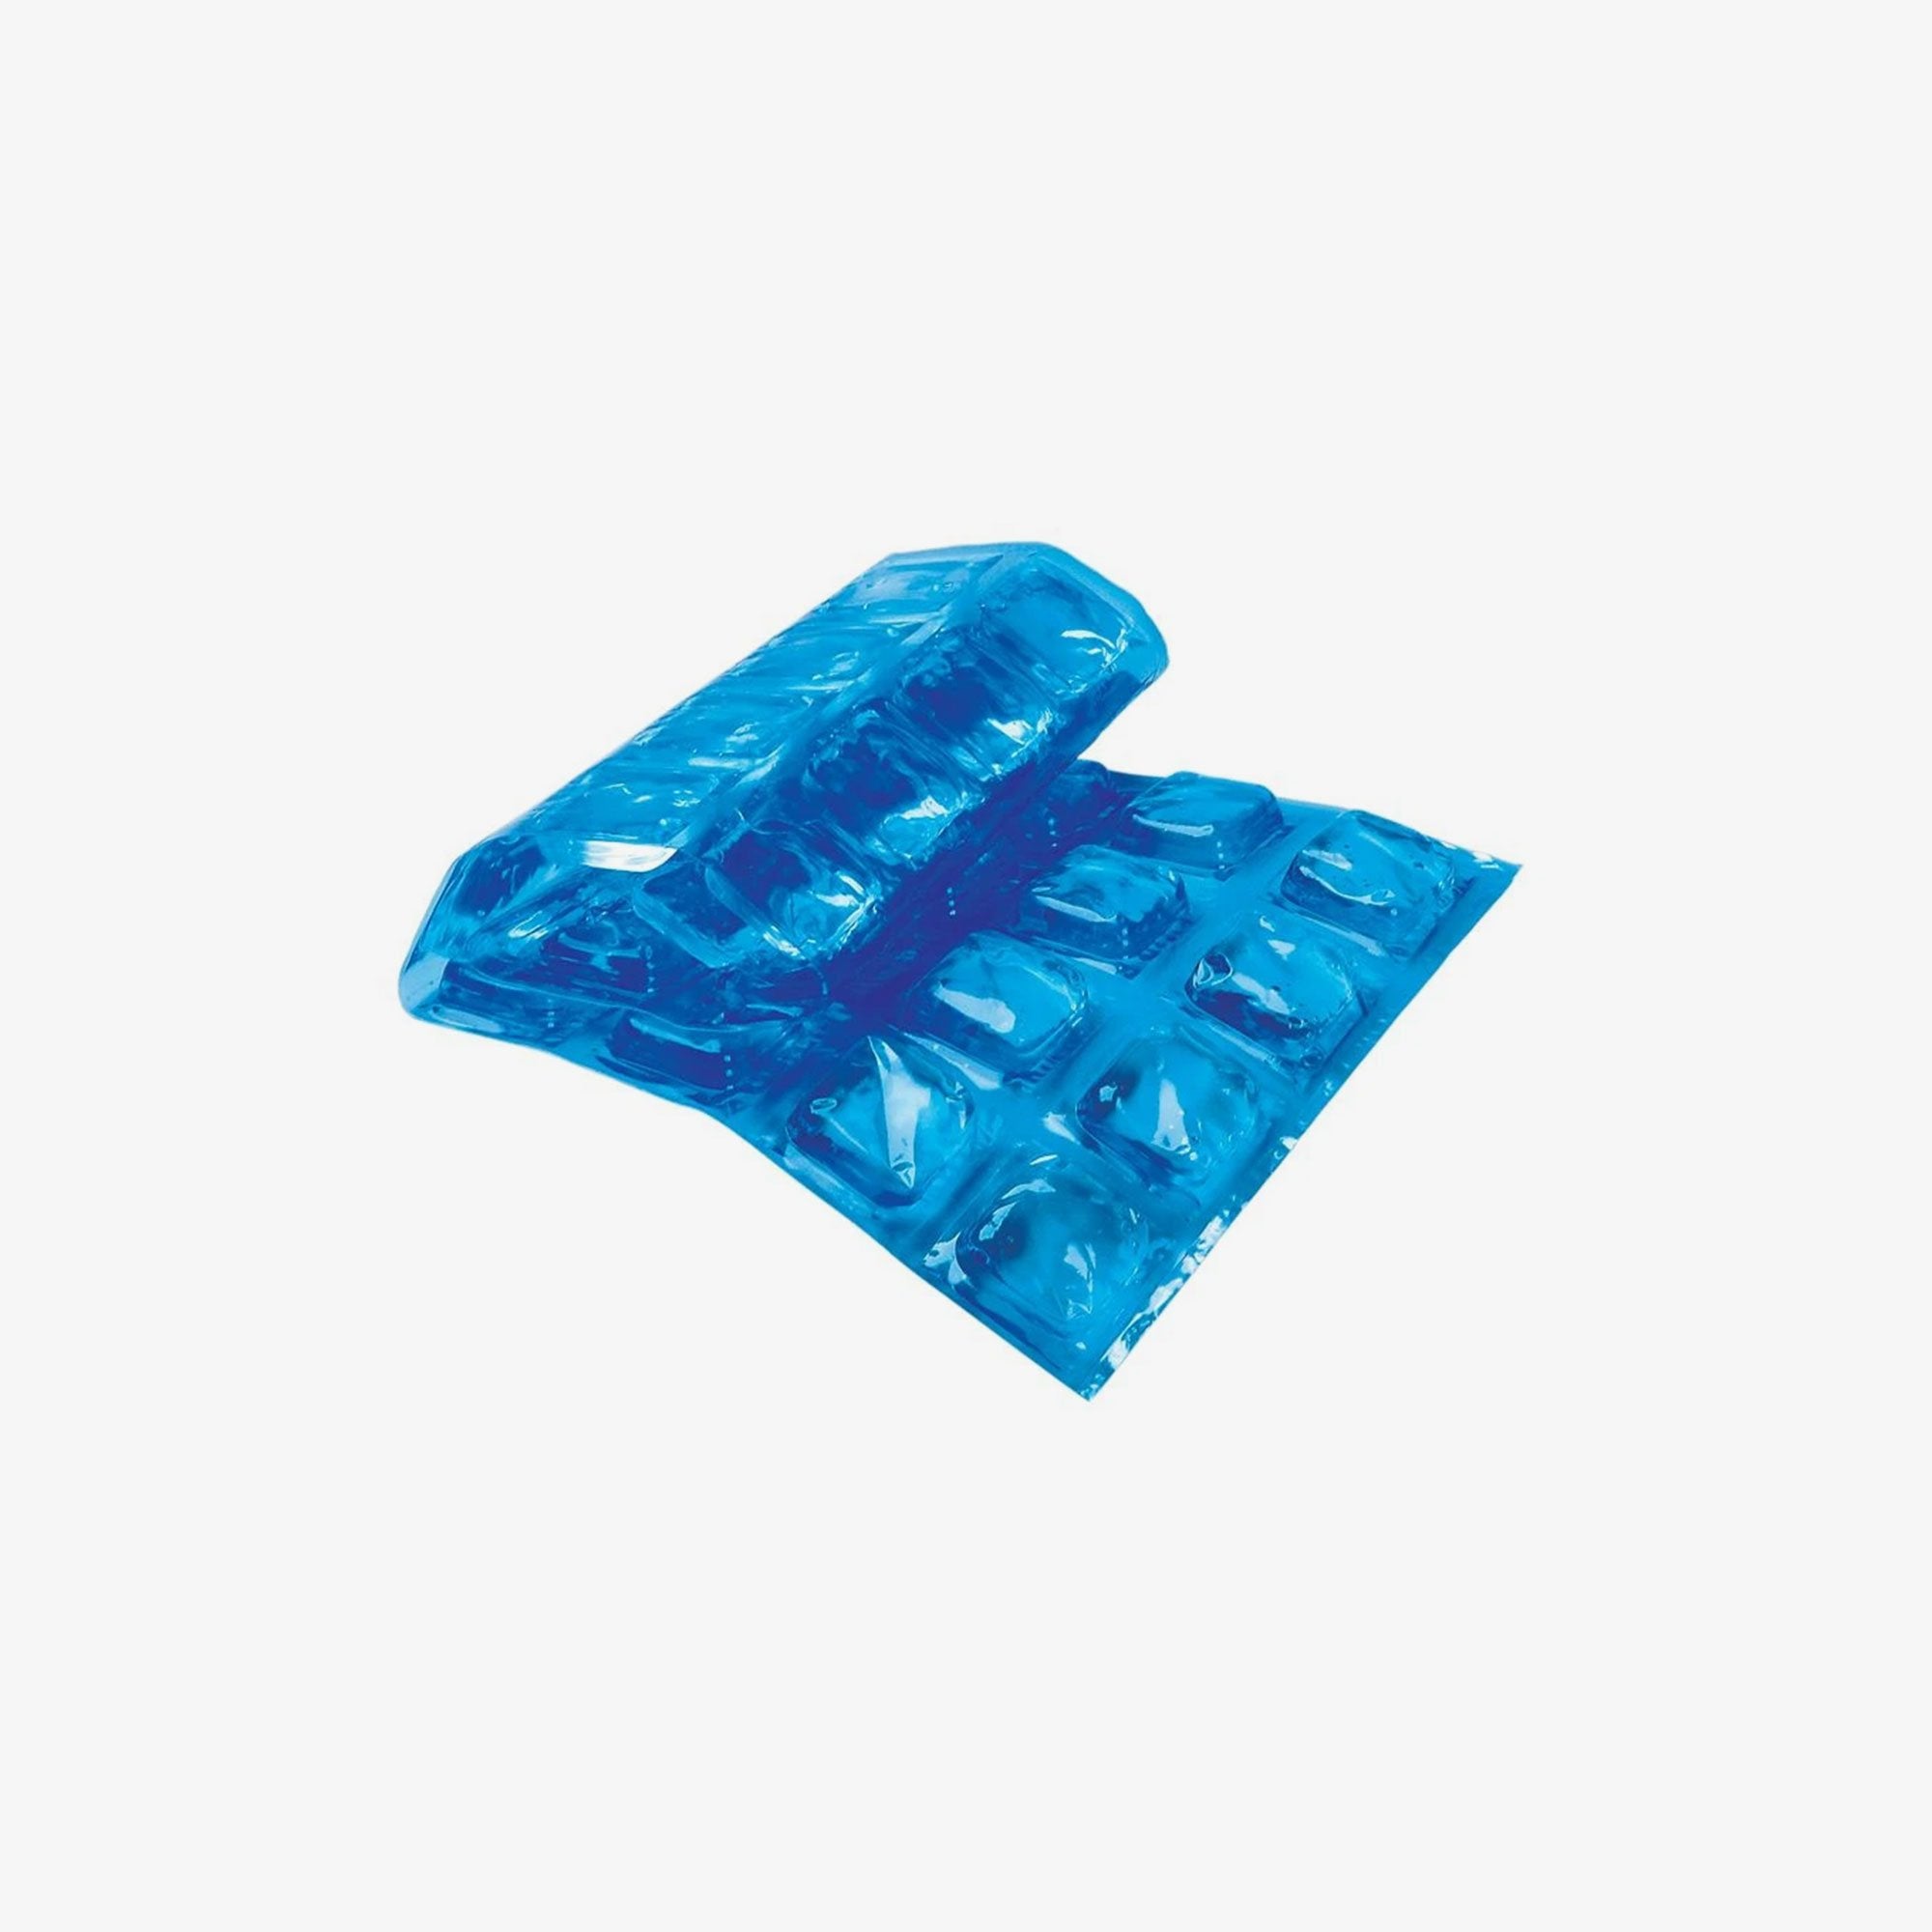 Igloo MaxCold Ice Pack 8 oz Blue 1 pk - Ace Hardware